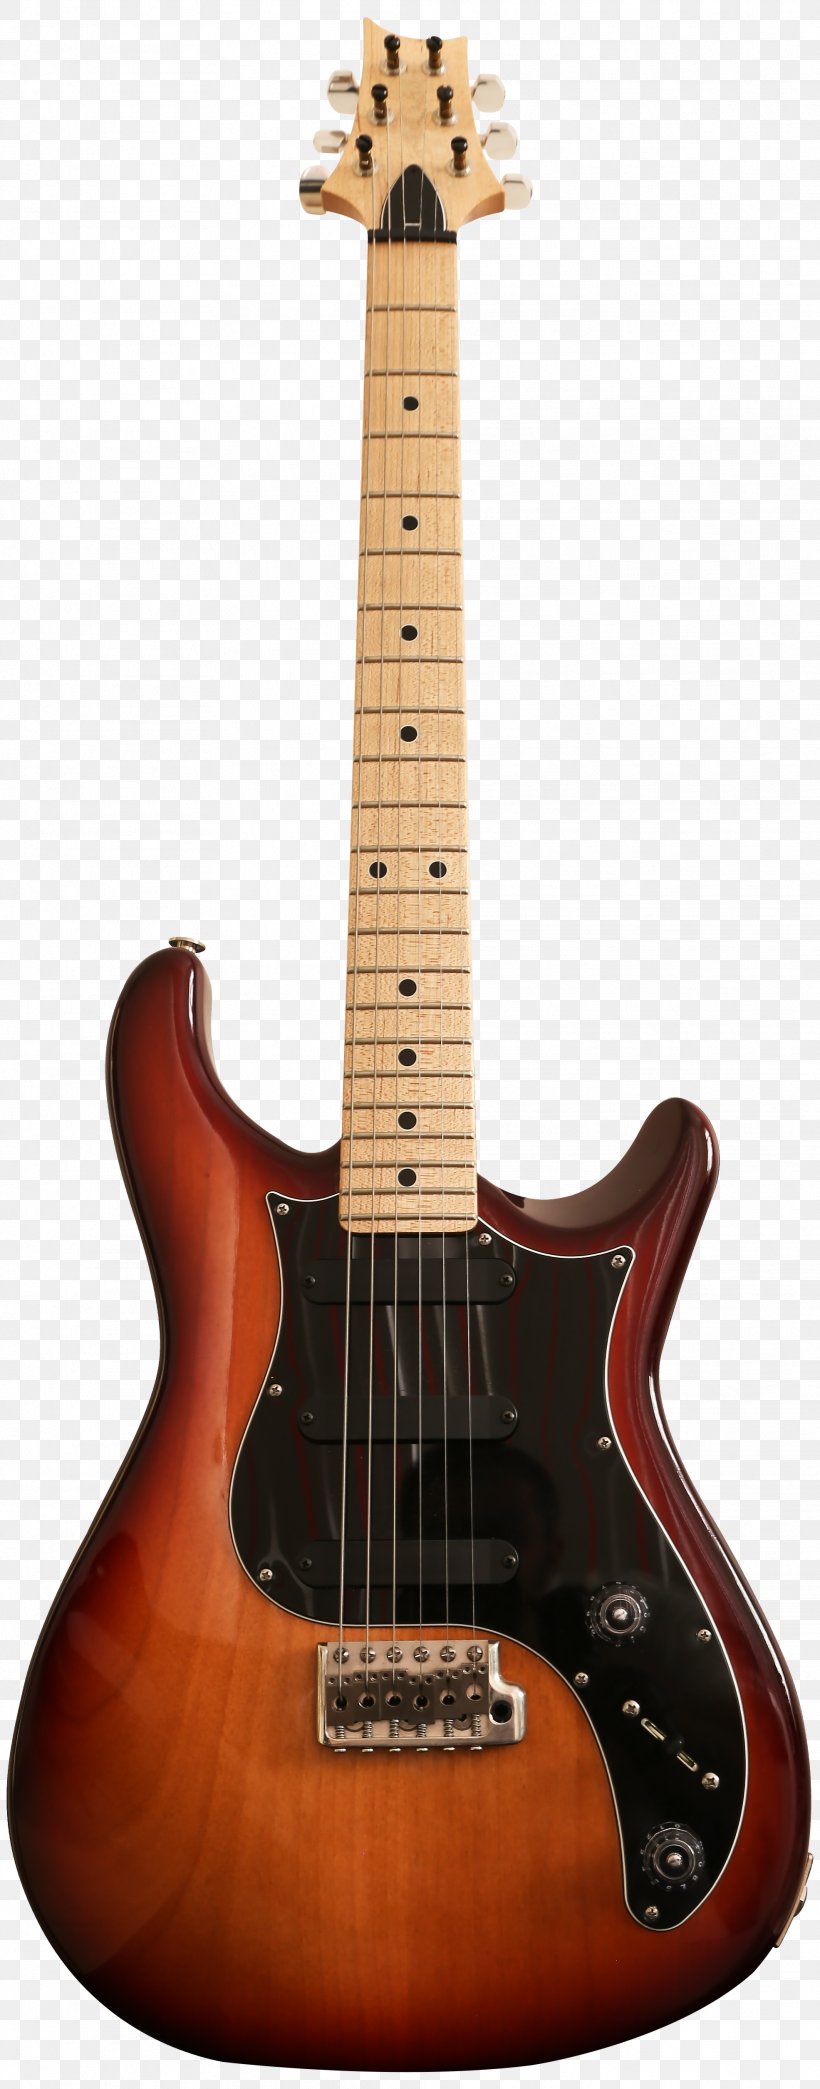 Squier Jagmaster Fender Jaguar Fender Stratocaster Fender Telecaster Fender Jazzmaster, PNG, 1971x5022px, Squier Jagmaster, Acoustic Electric Guitar, Acoustic Guitar, Bass Guitar, Electric Guitar Download Free